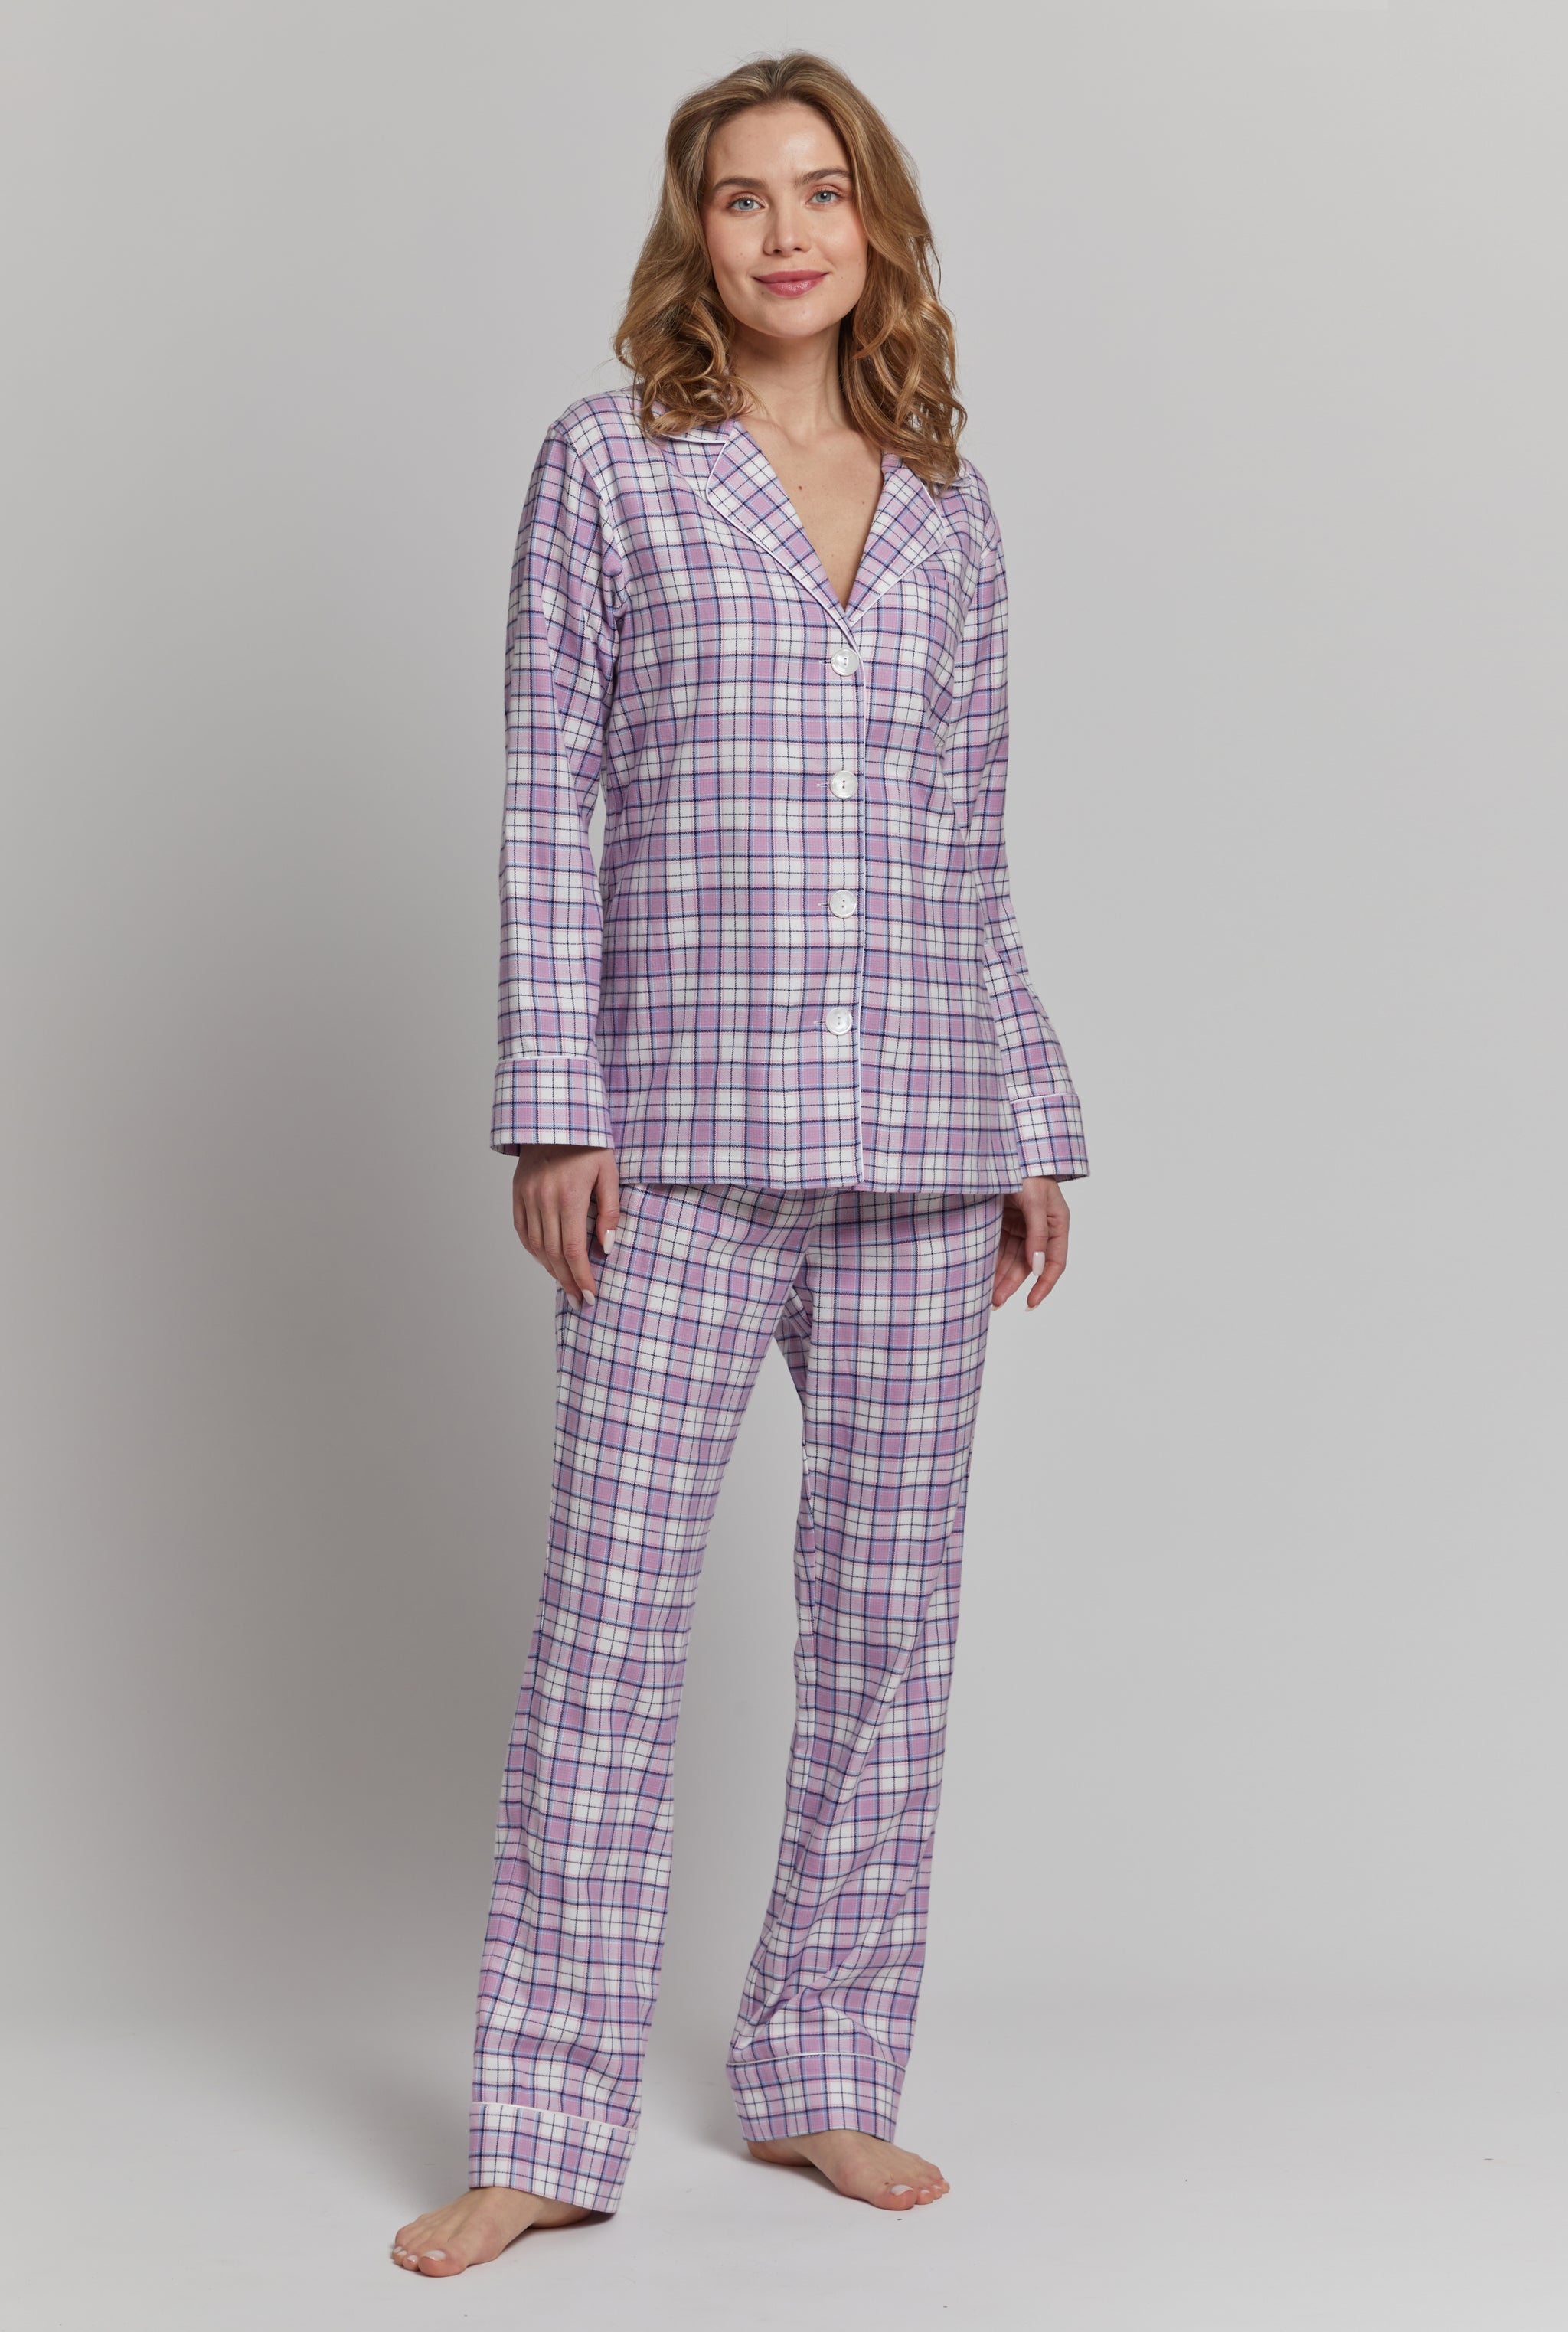 Women's Cotton Flannel Pajamas, Best Cotton Pajama